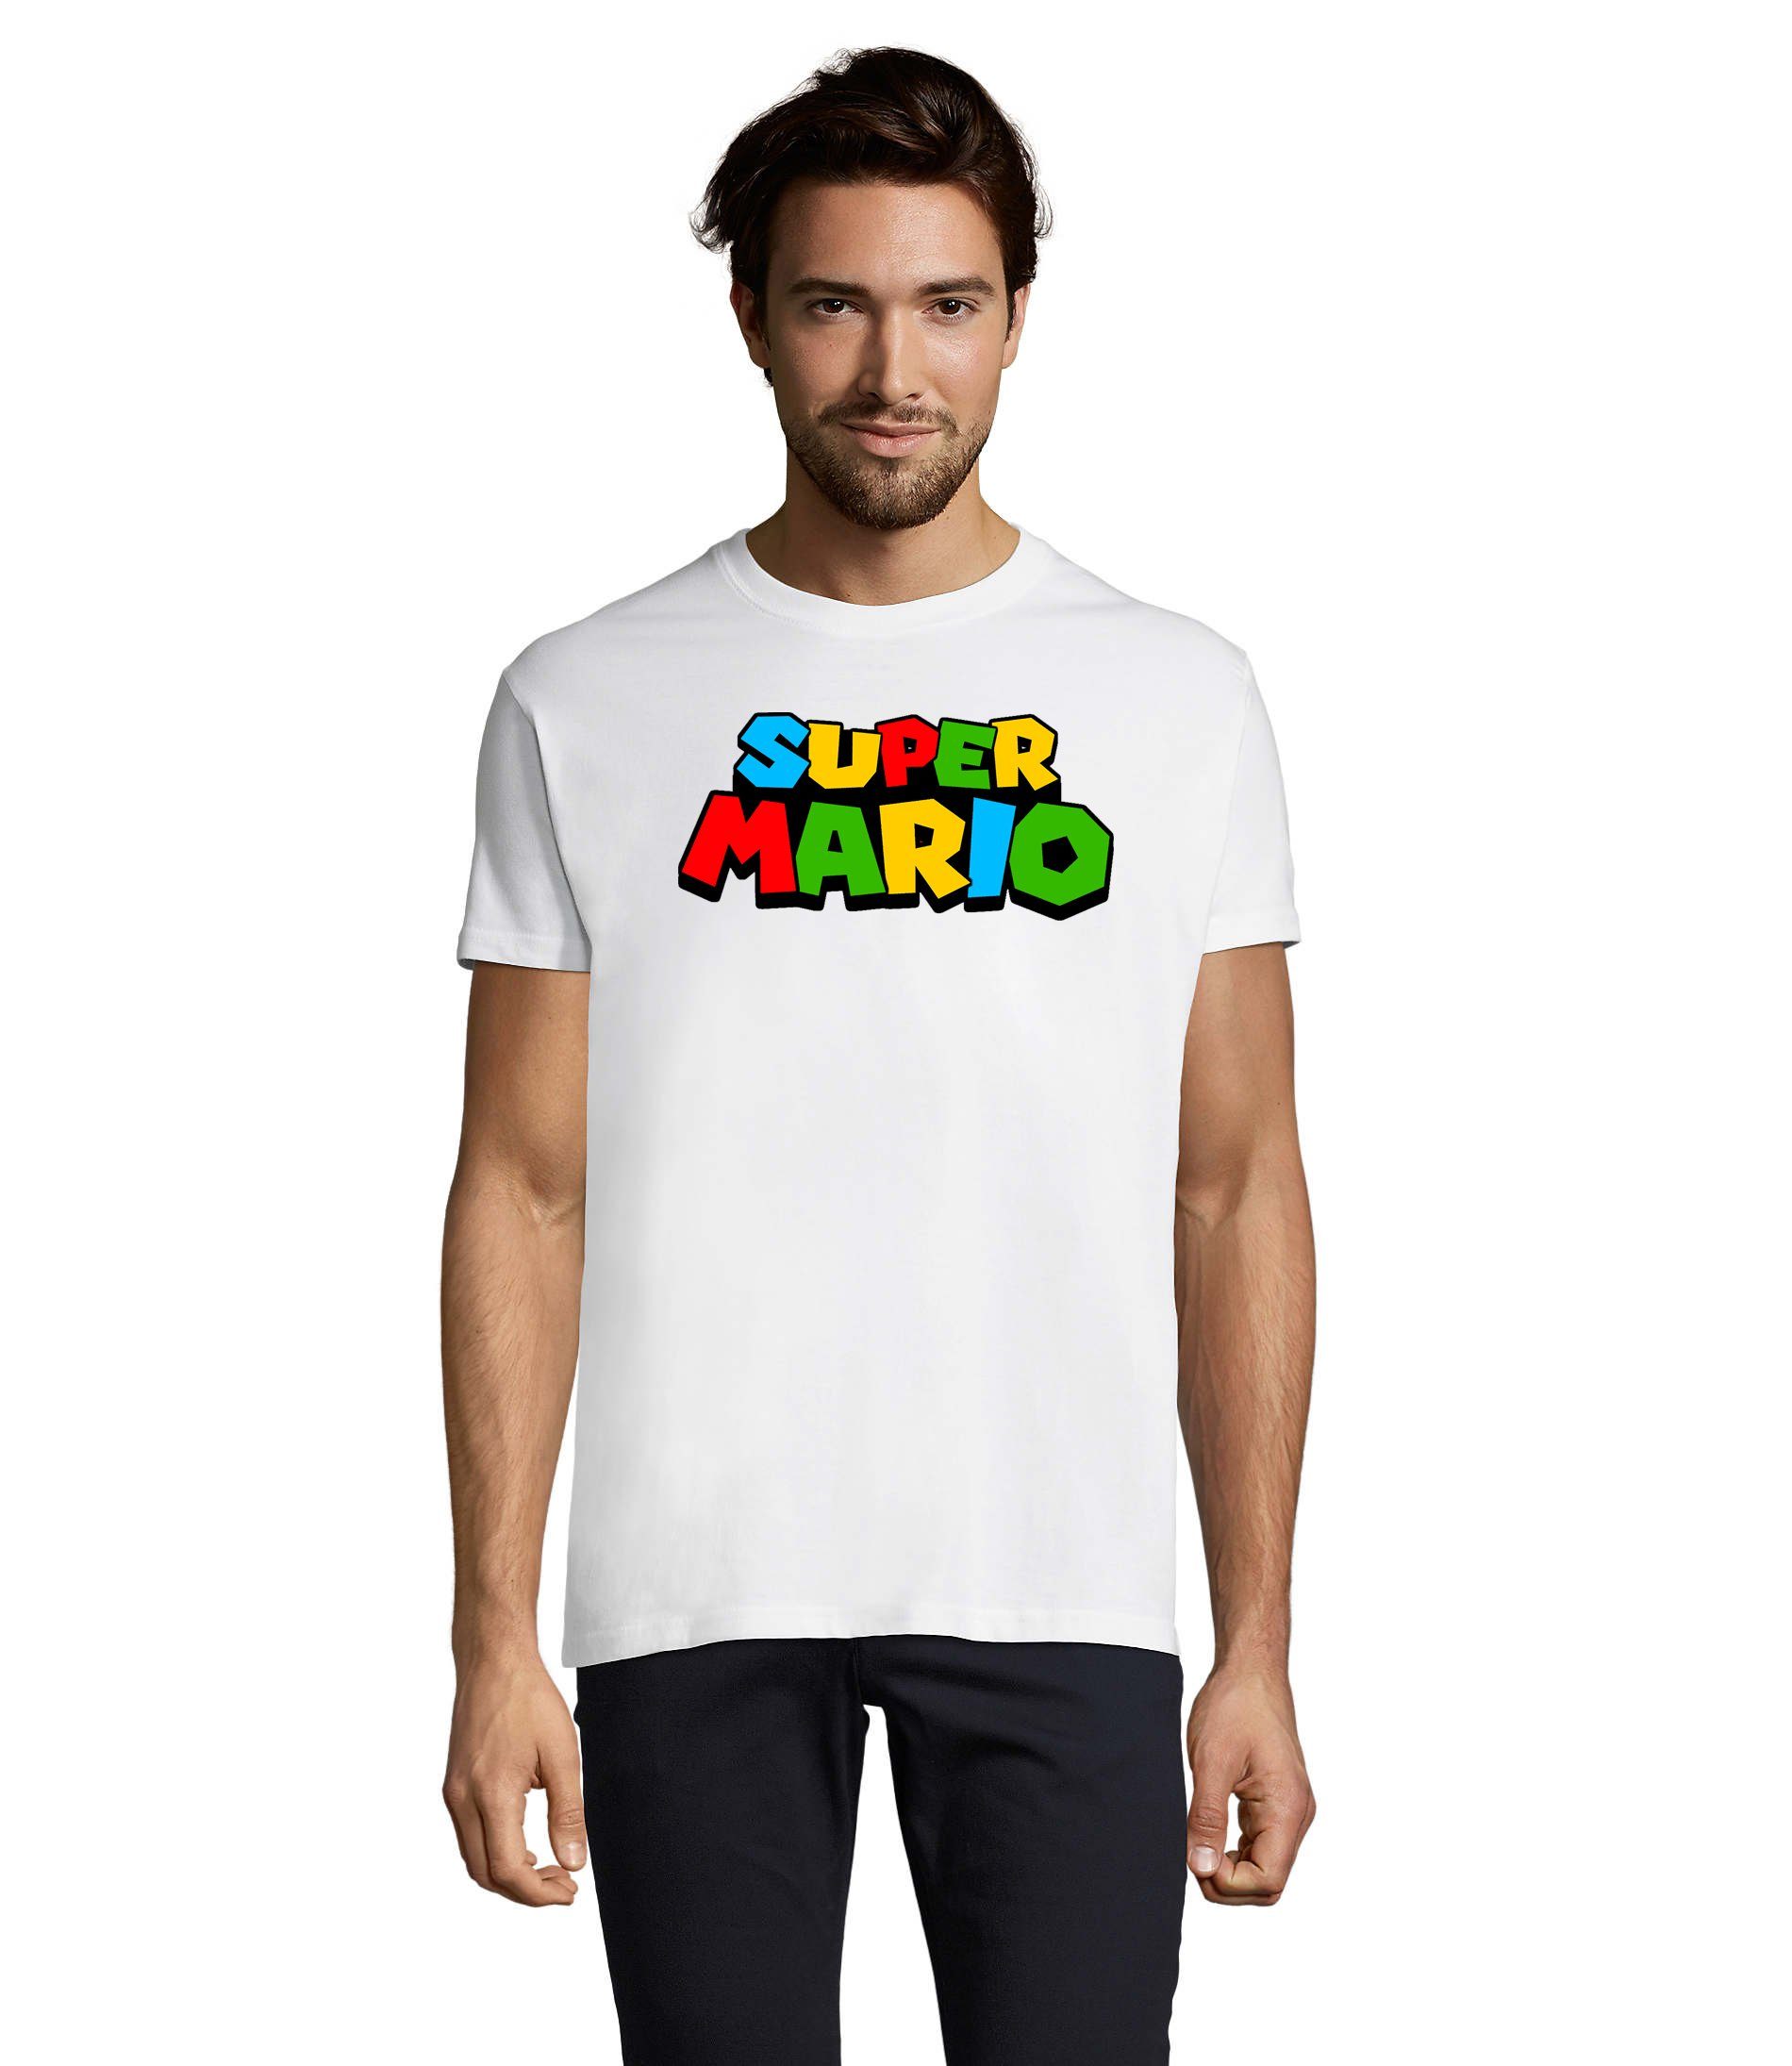 Blondie & Brownie T-Shirt Herren Super Mario Nintendo Gamer Gaming Konsole Weiß